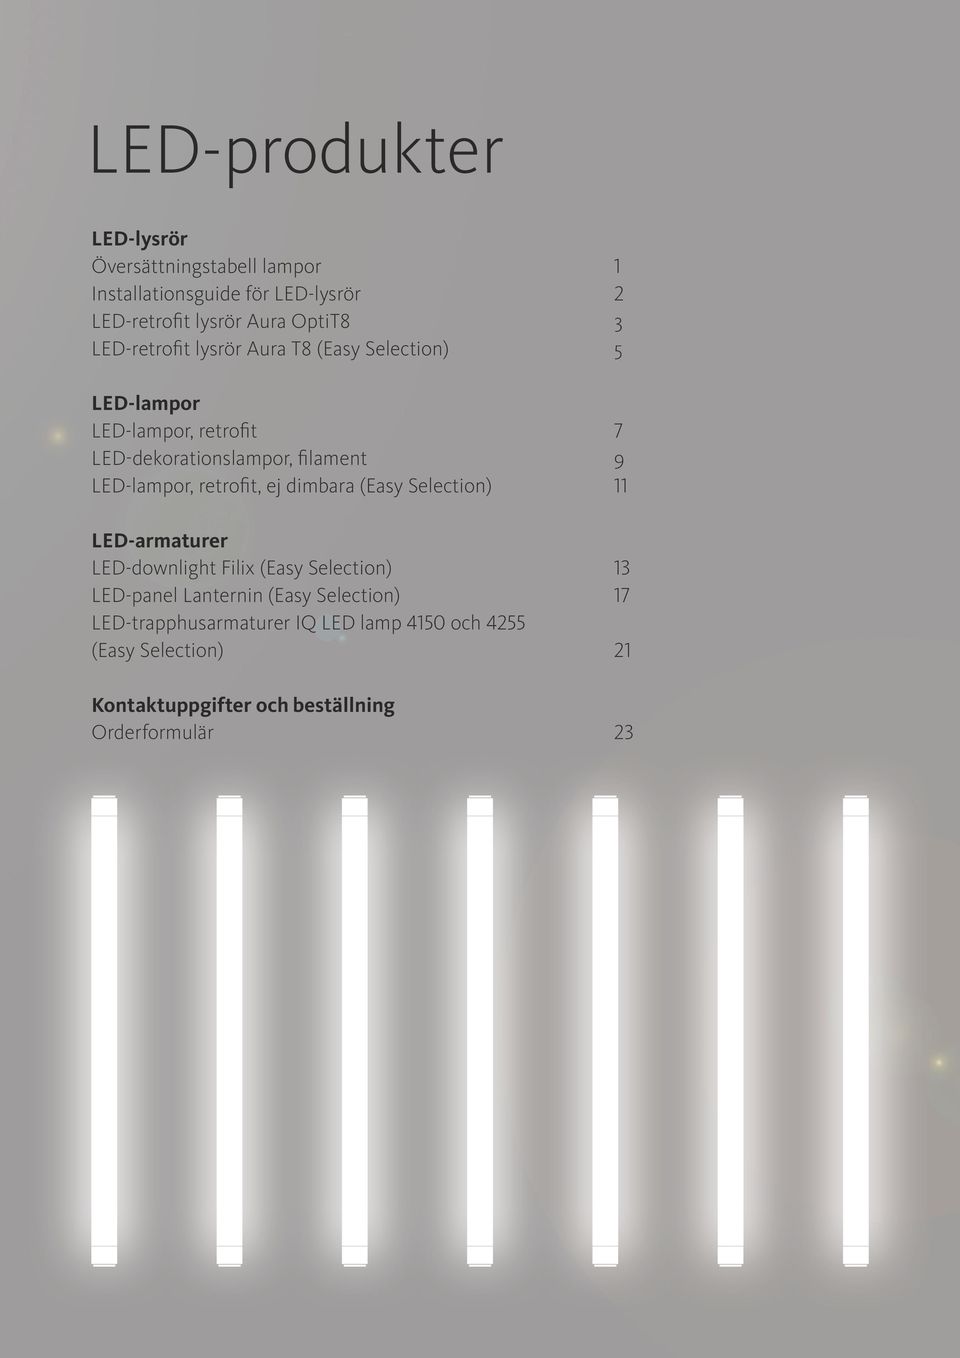 LED-lampor, retrofit, ej dimbara (Easy Selection) 11 LED-armaturer LED-downlight Filix (Easy Selection) 13 LED-panel